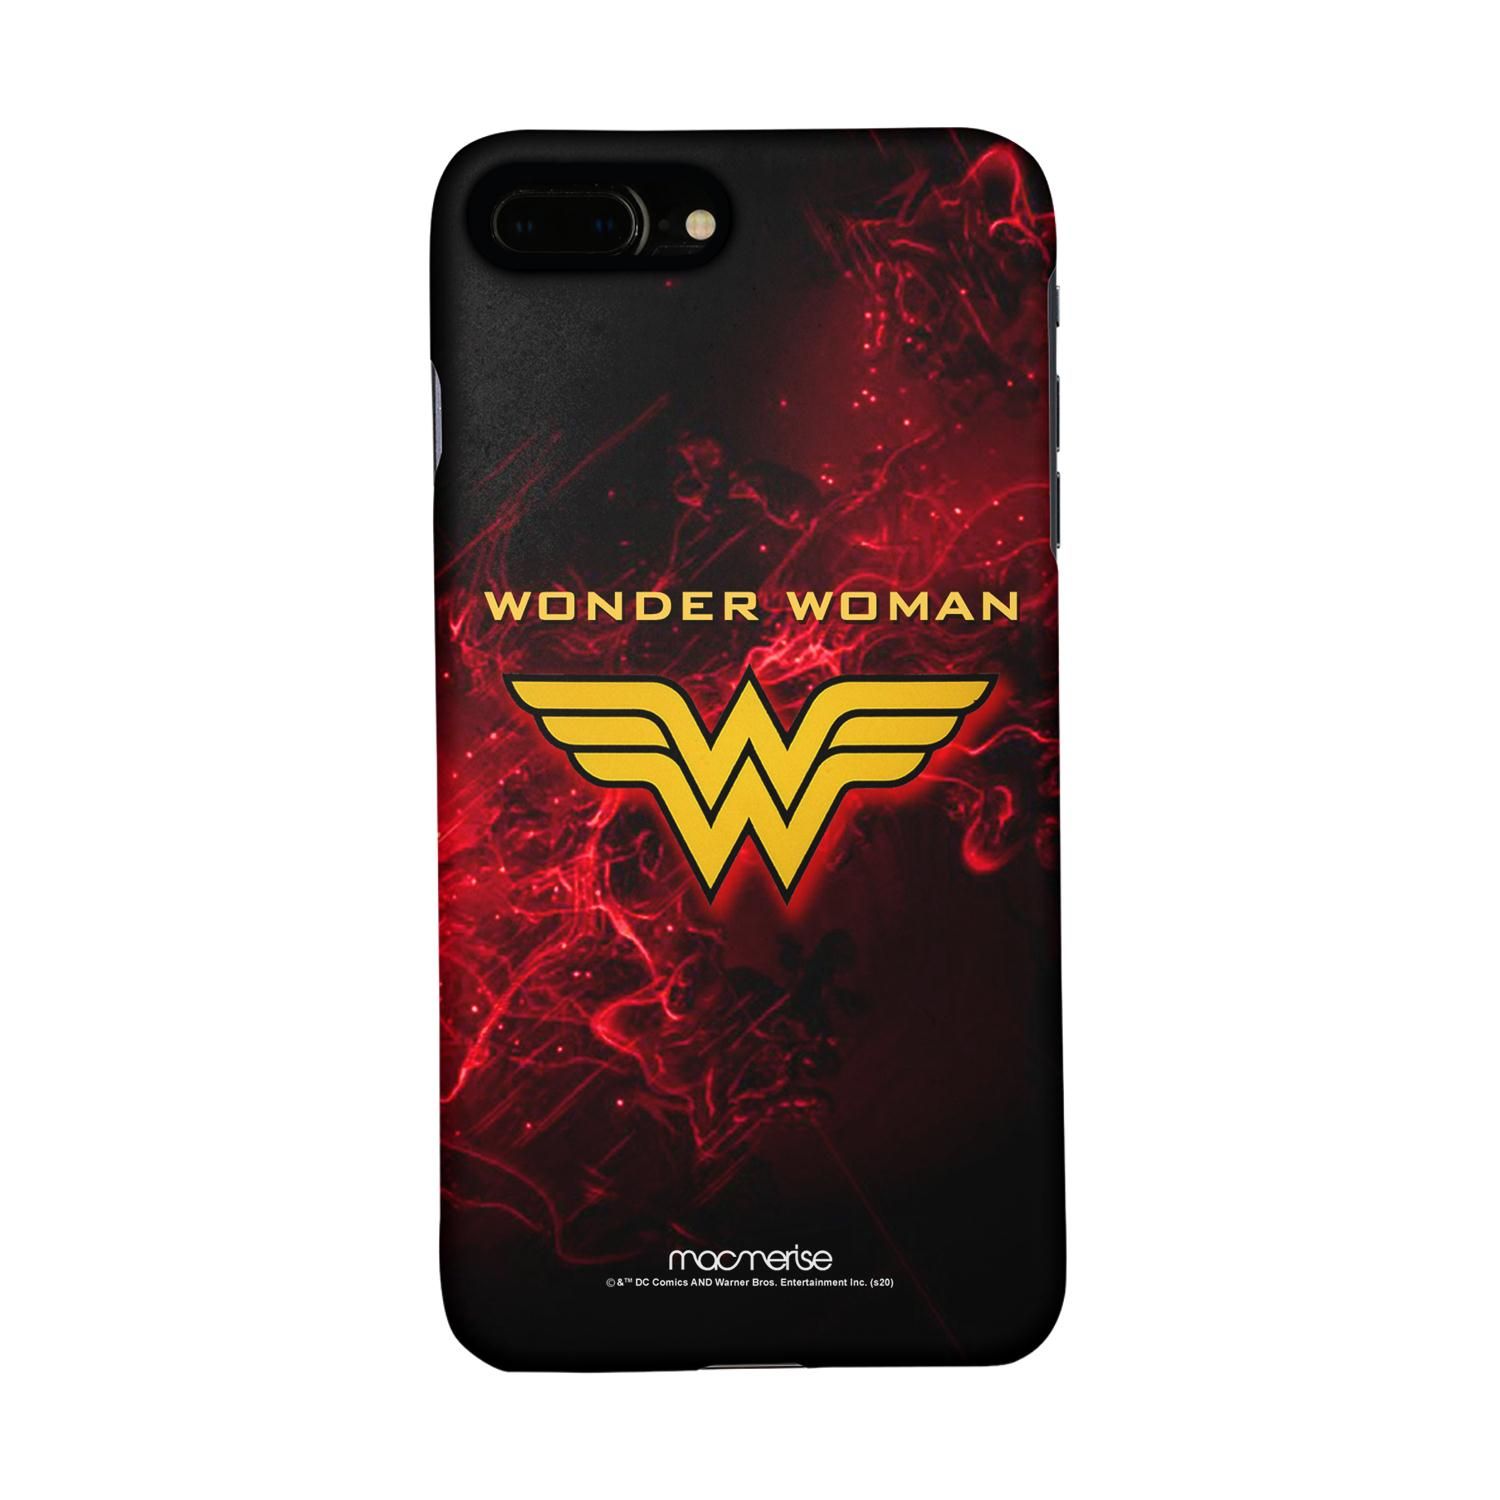 Buy Emblem Wonder Woman - Sleek Phone Case for iPhone 7 Plus Online